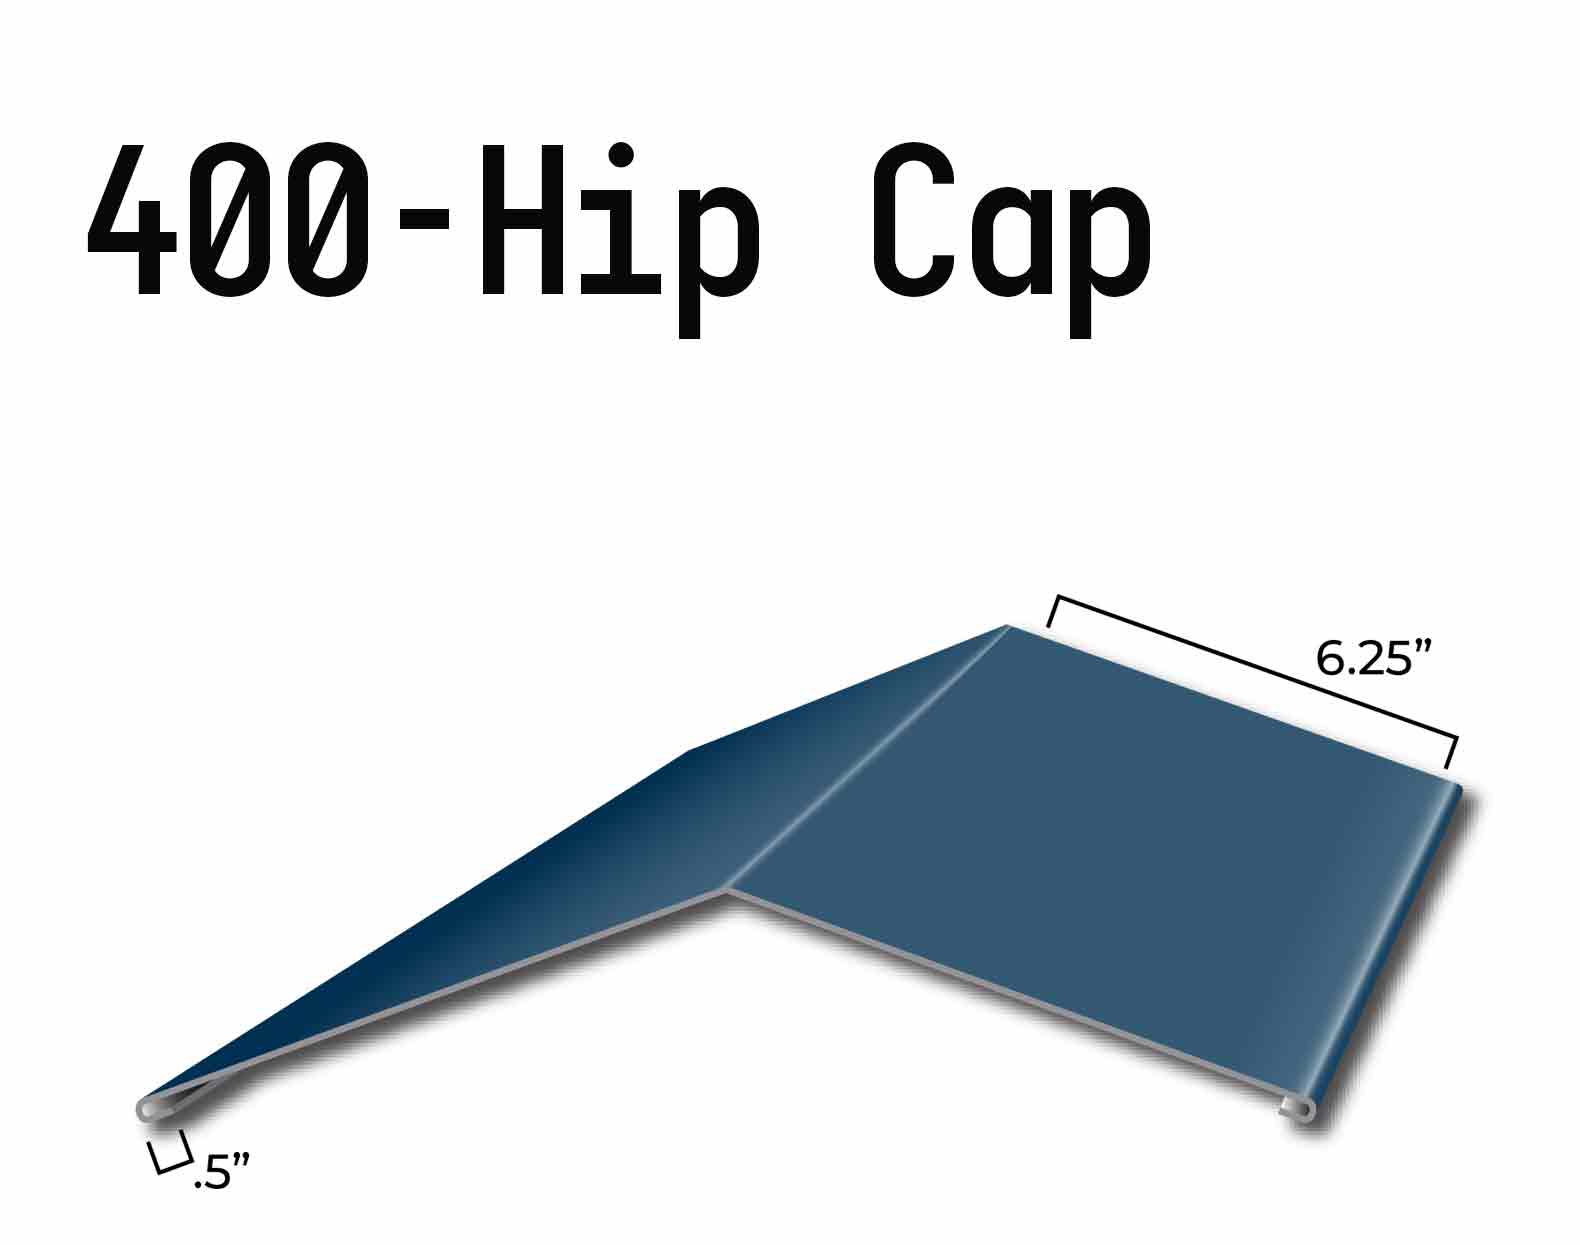 MRS-FF100 400-Hip Cap